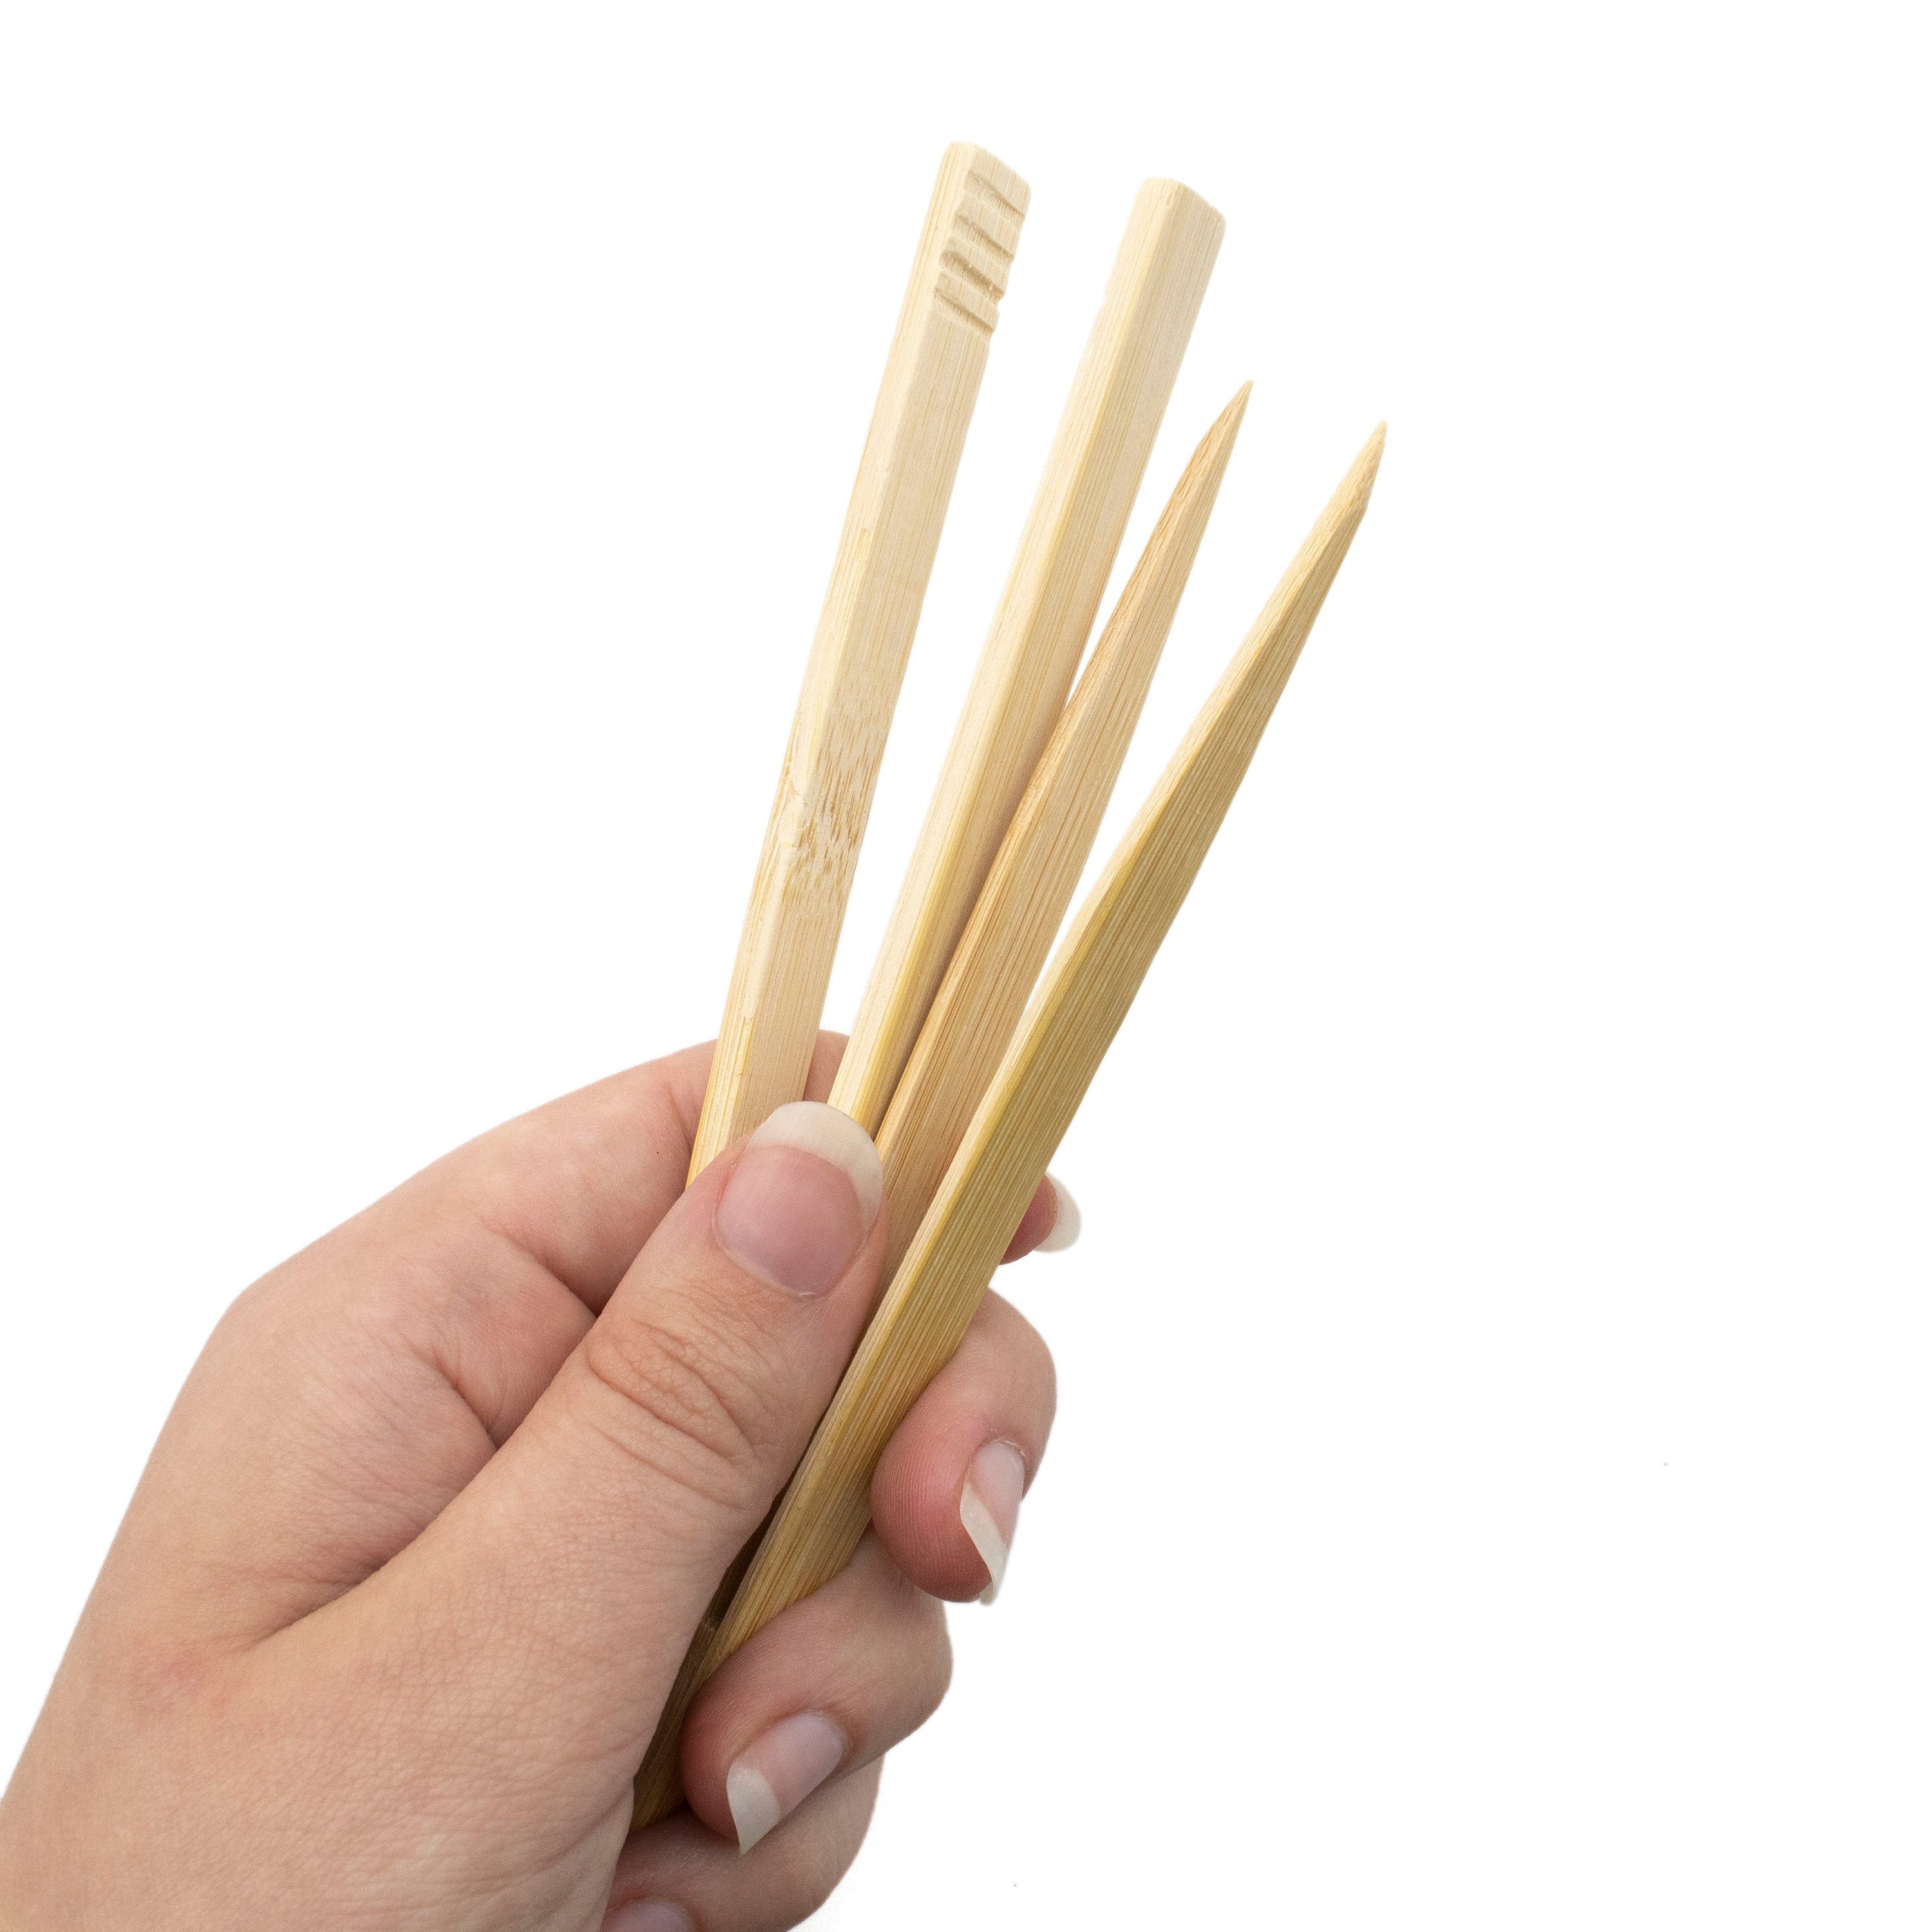 Bamboo Tweezer Set - Needle Nose and Flat Nose Tweezers